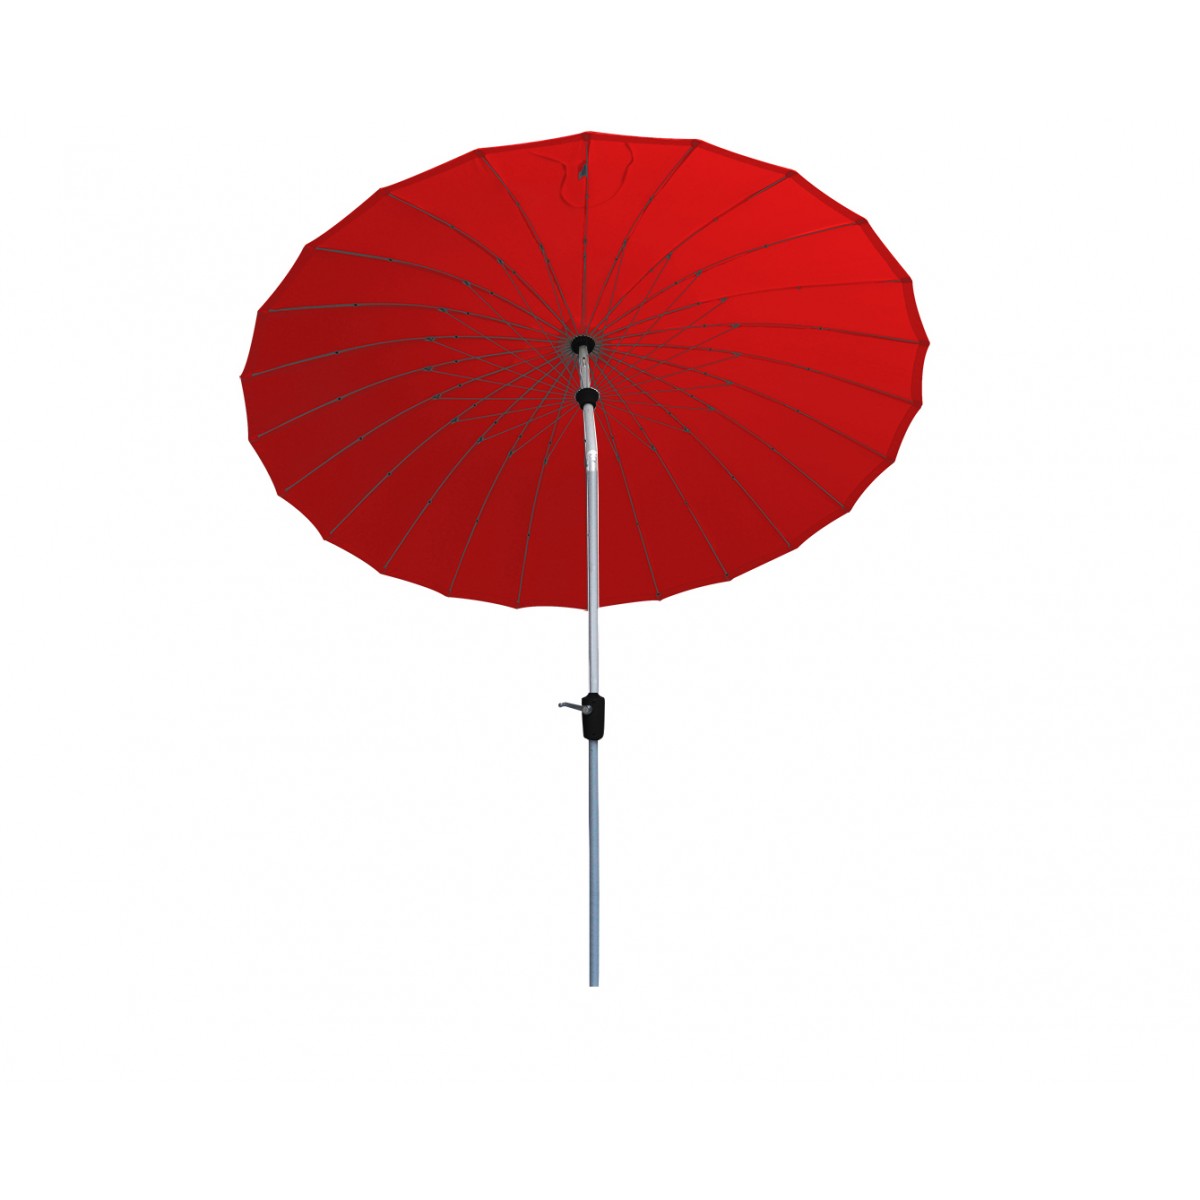 kom tot rust Conceit Moskee Solero Parasol Vaticano Pro rood ø 250 cm - Parasols XL